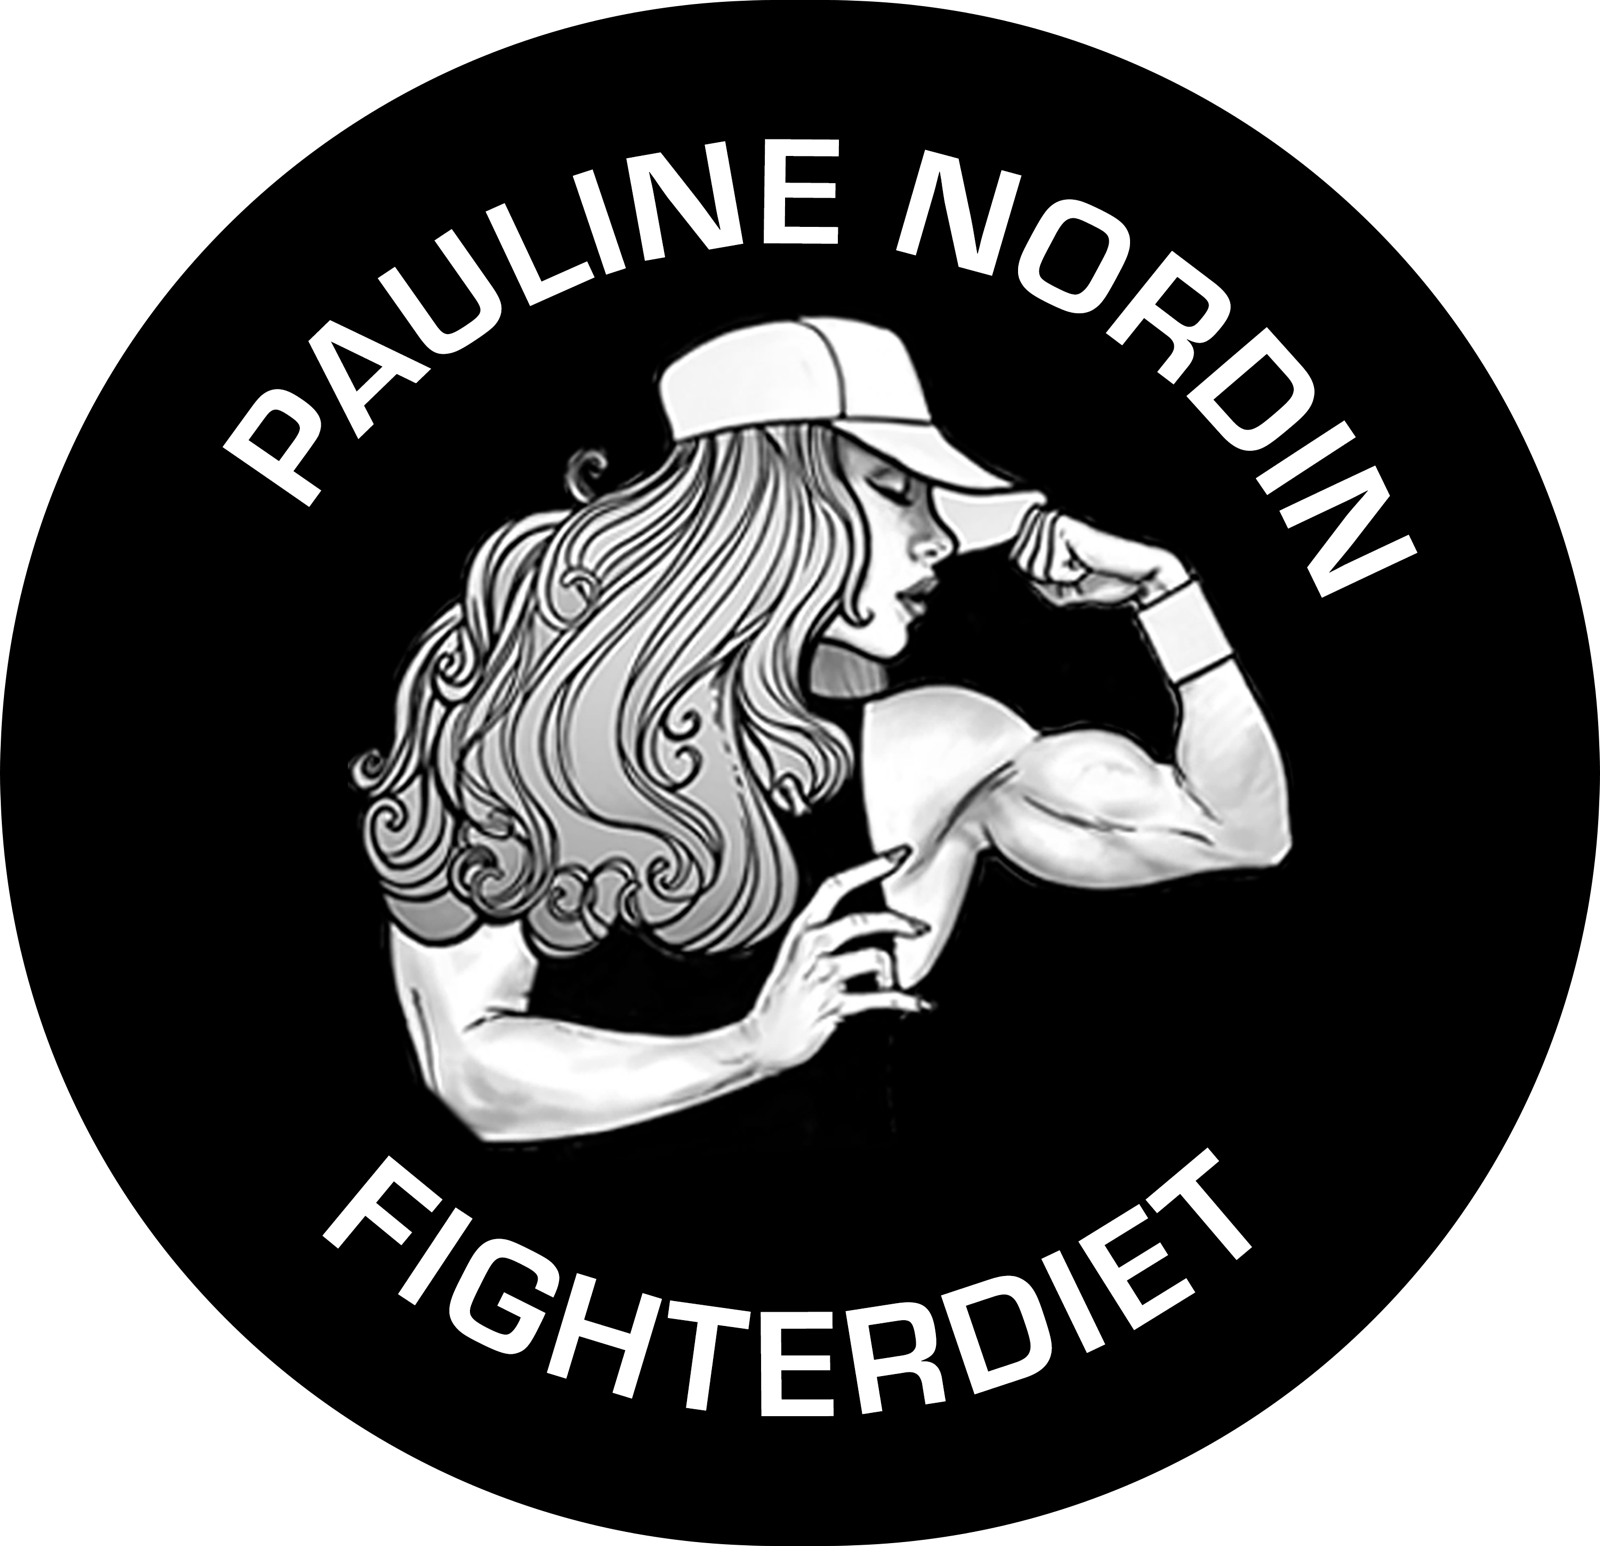 Pauline Nordin